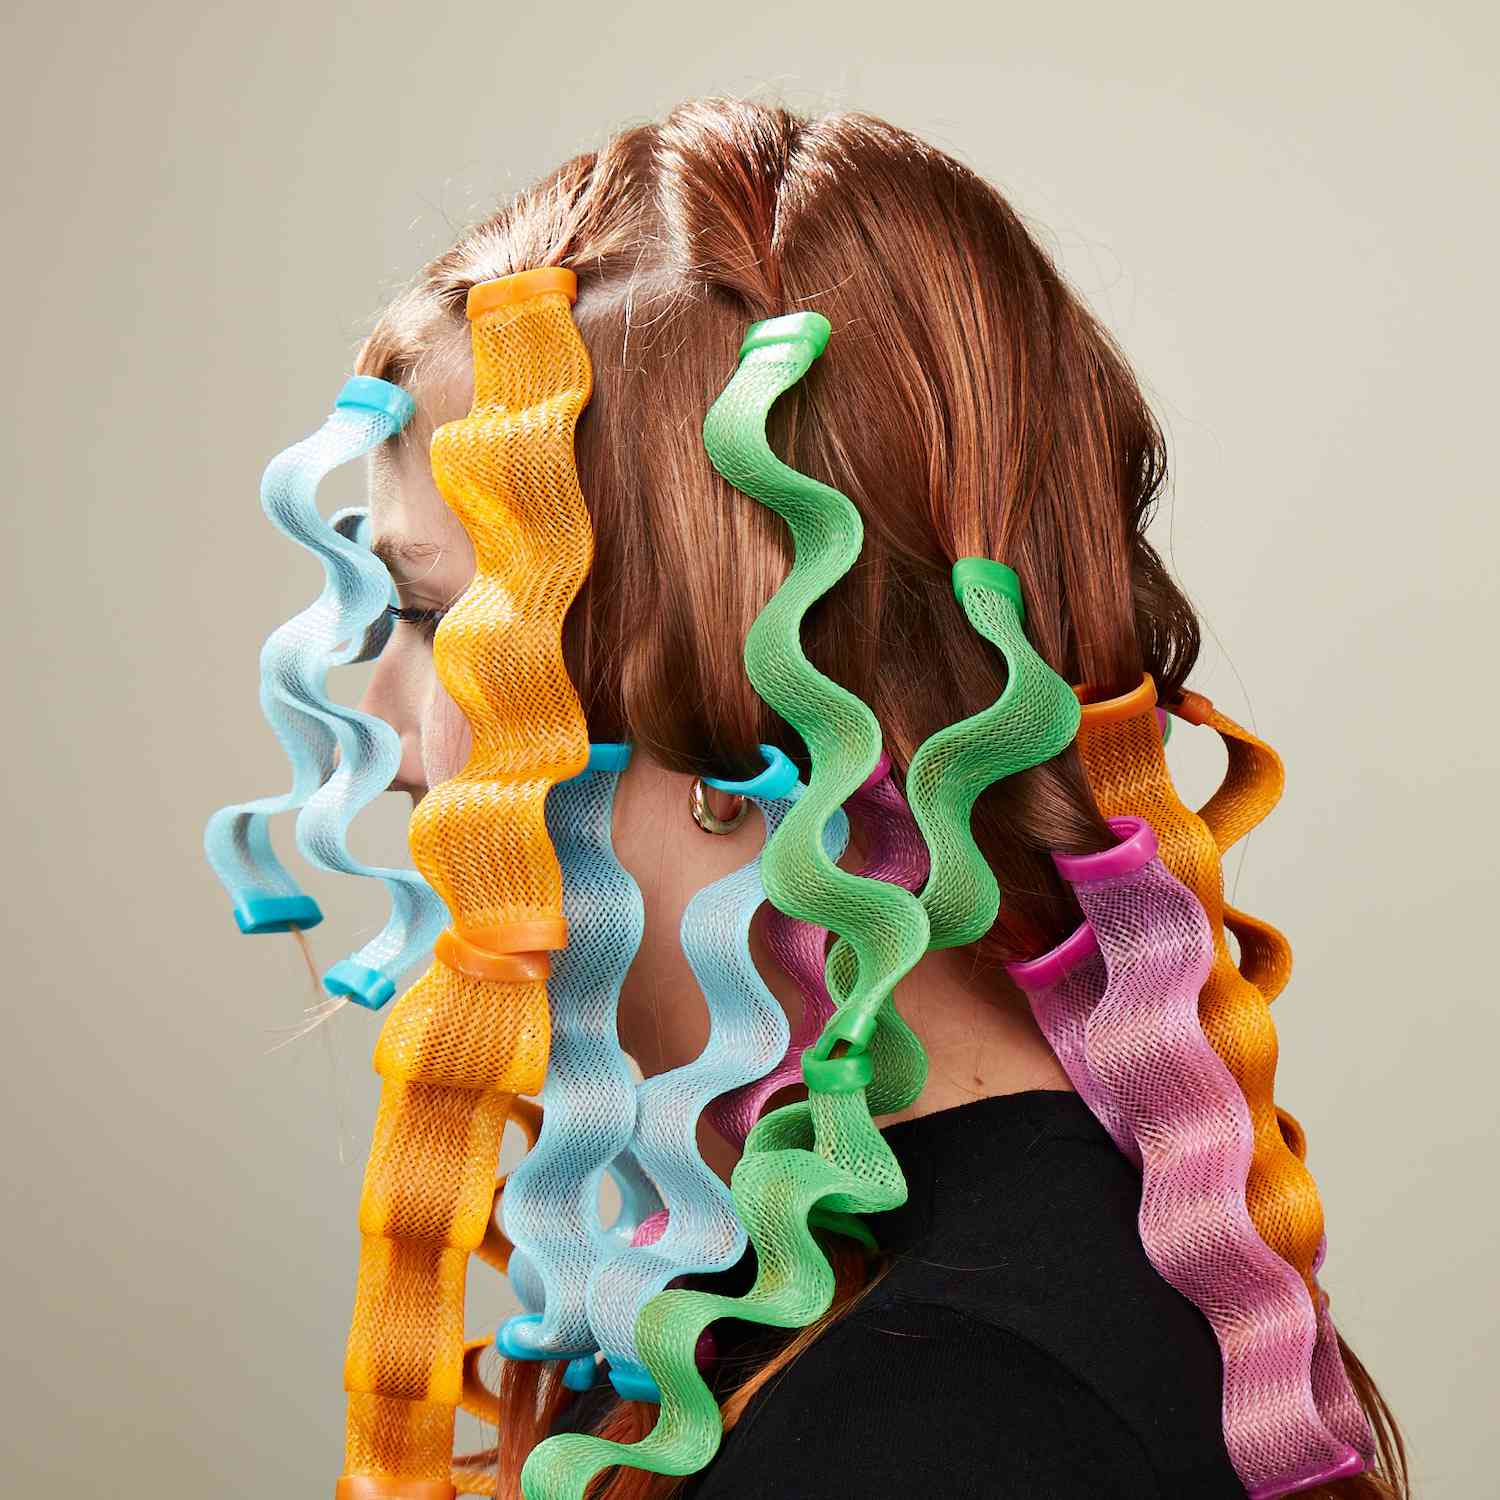 Side profile of Byrdie editor Bella Cacciatore's hair with waveformers installled